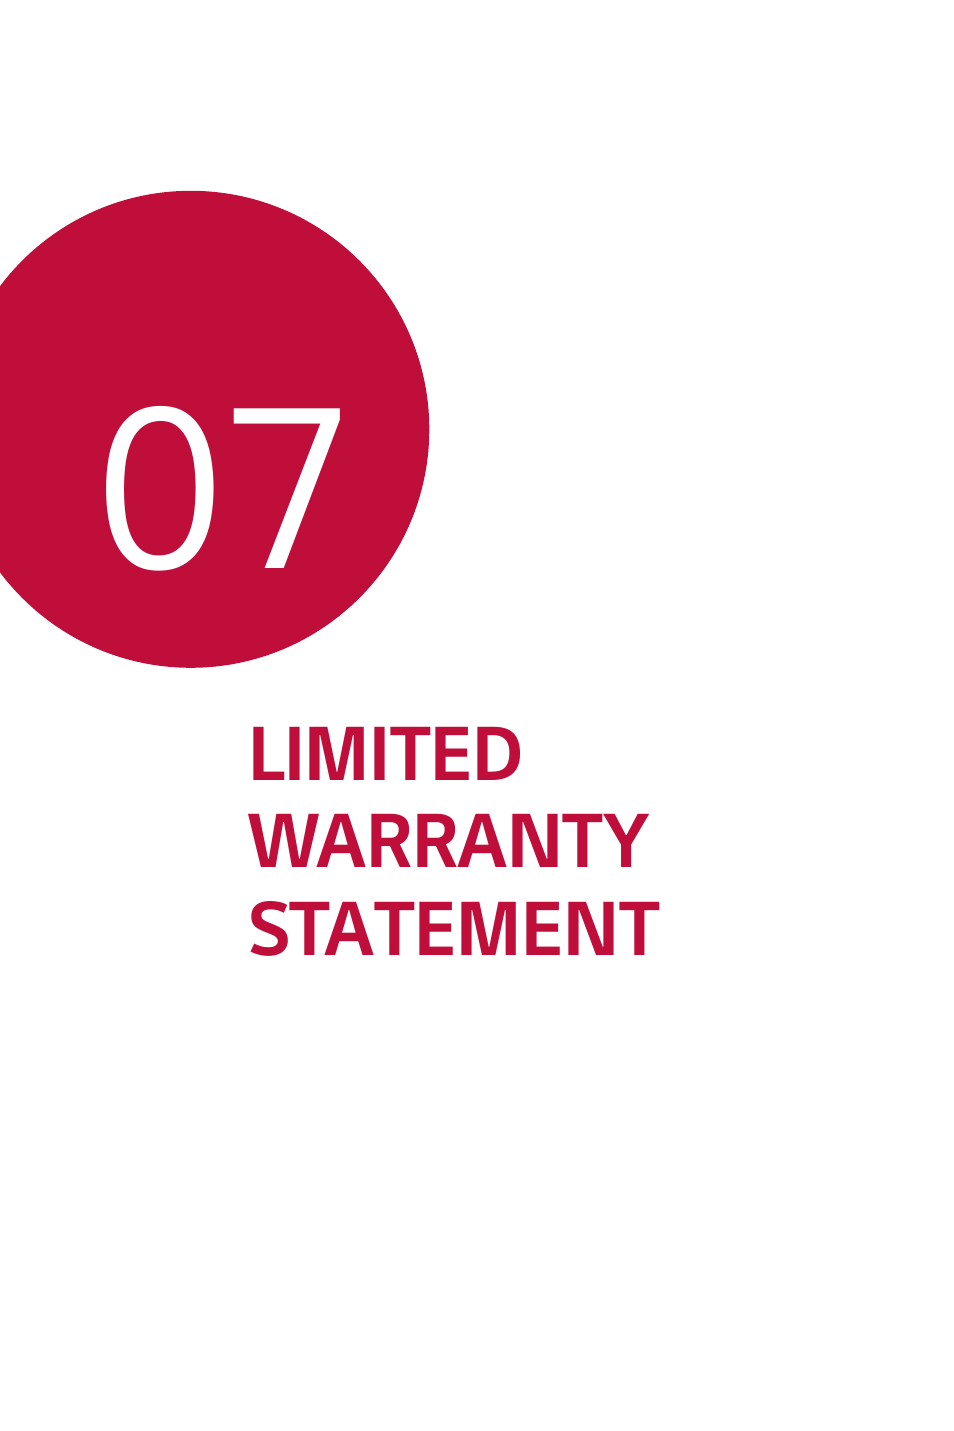 Limited warranty statement, Limited warranty, Statement | LG G6 H872 User Manual | Page 176 / 183